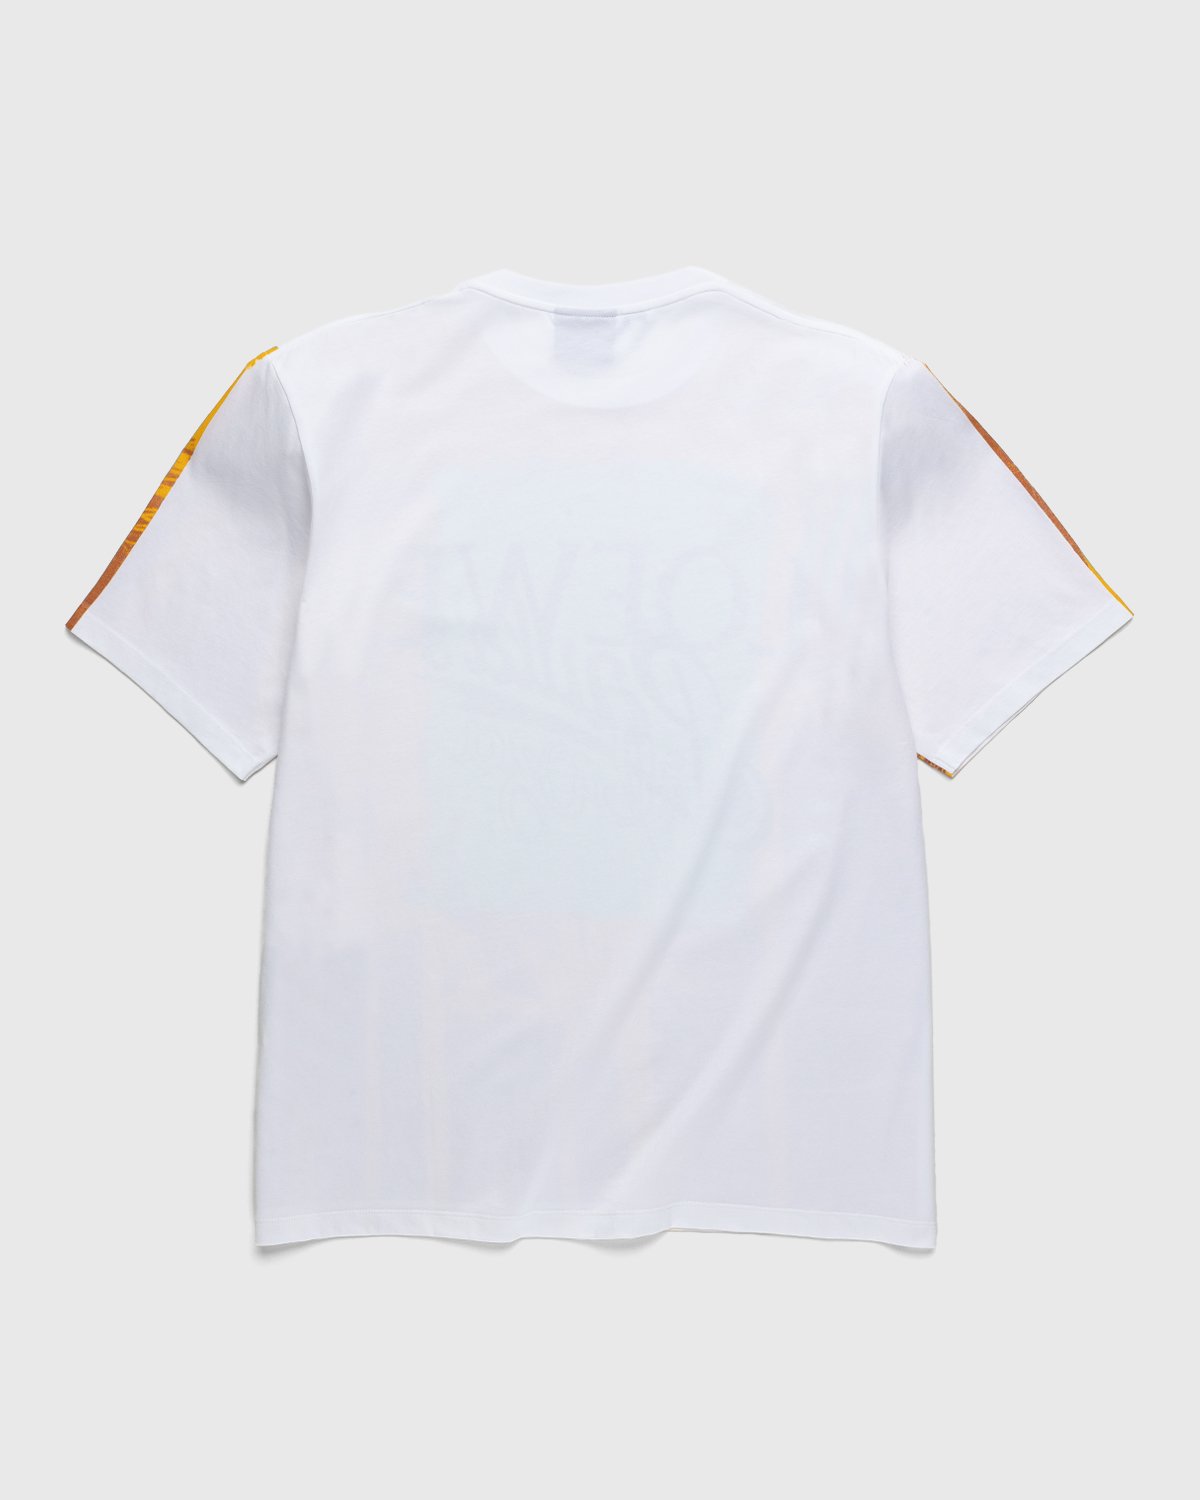 Loewe - Paula's Ibiza Palm Print T-Shirt White/Multi - Clothing - Multi - Image 2